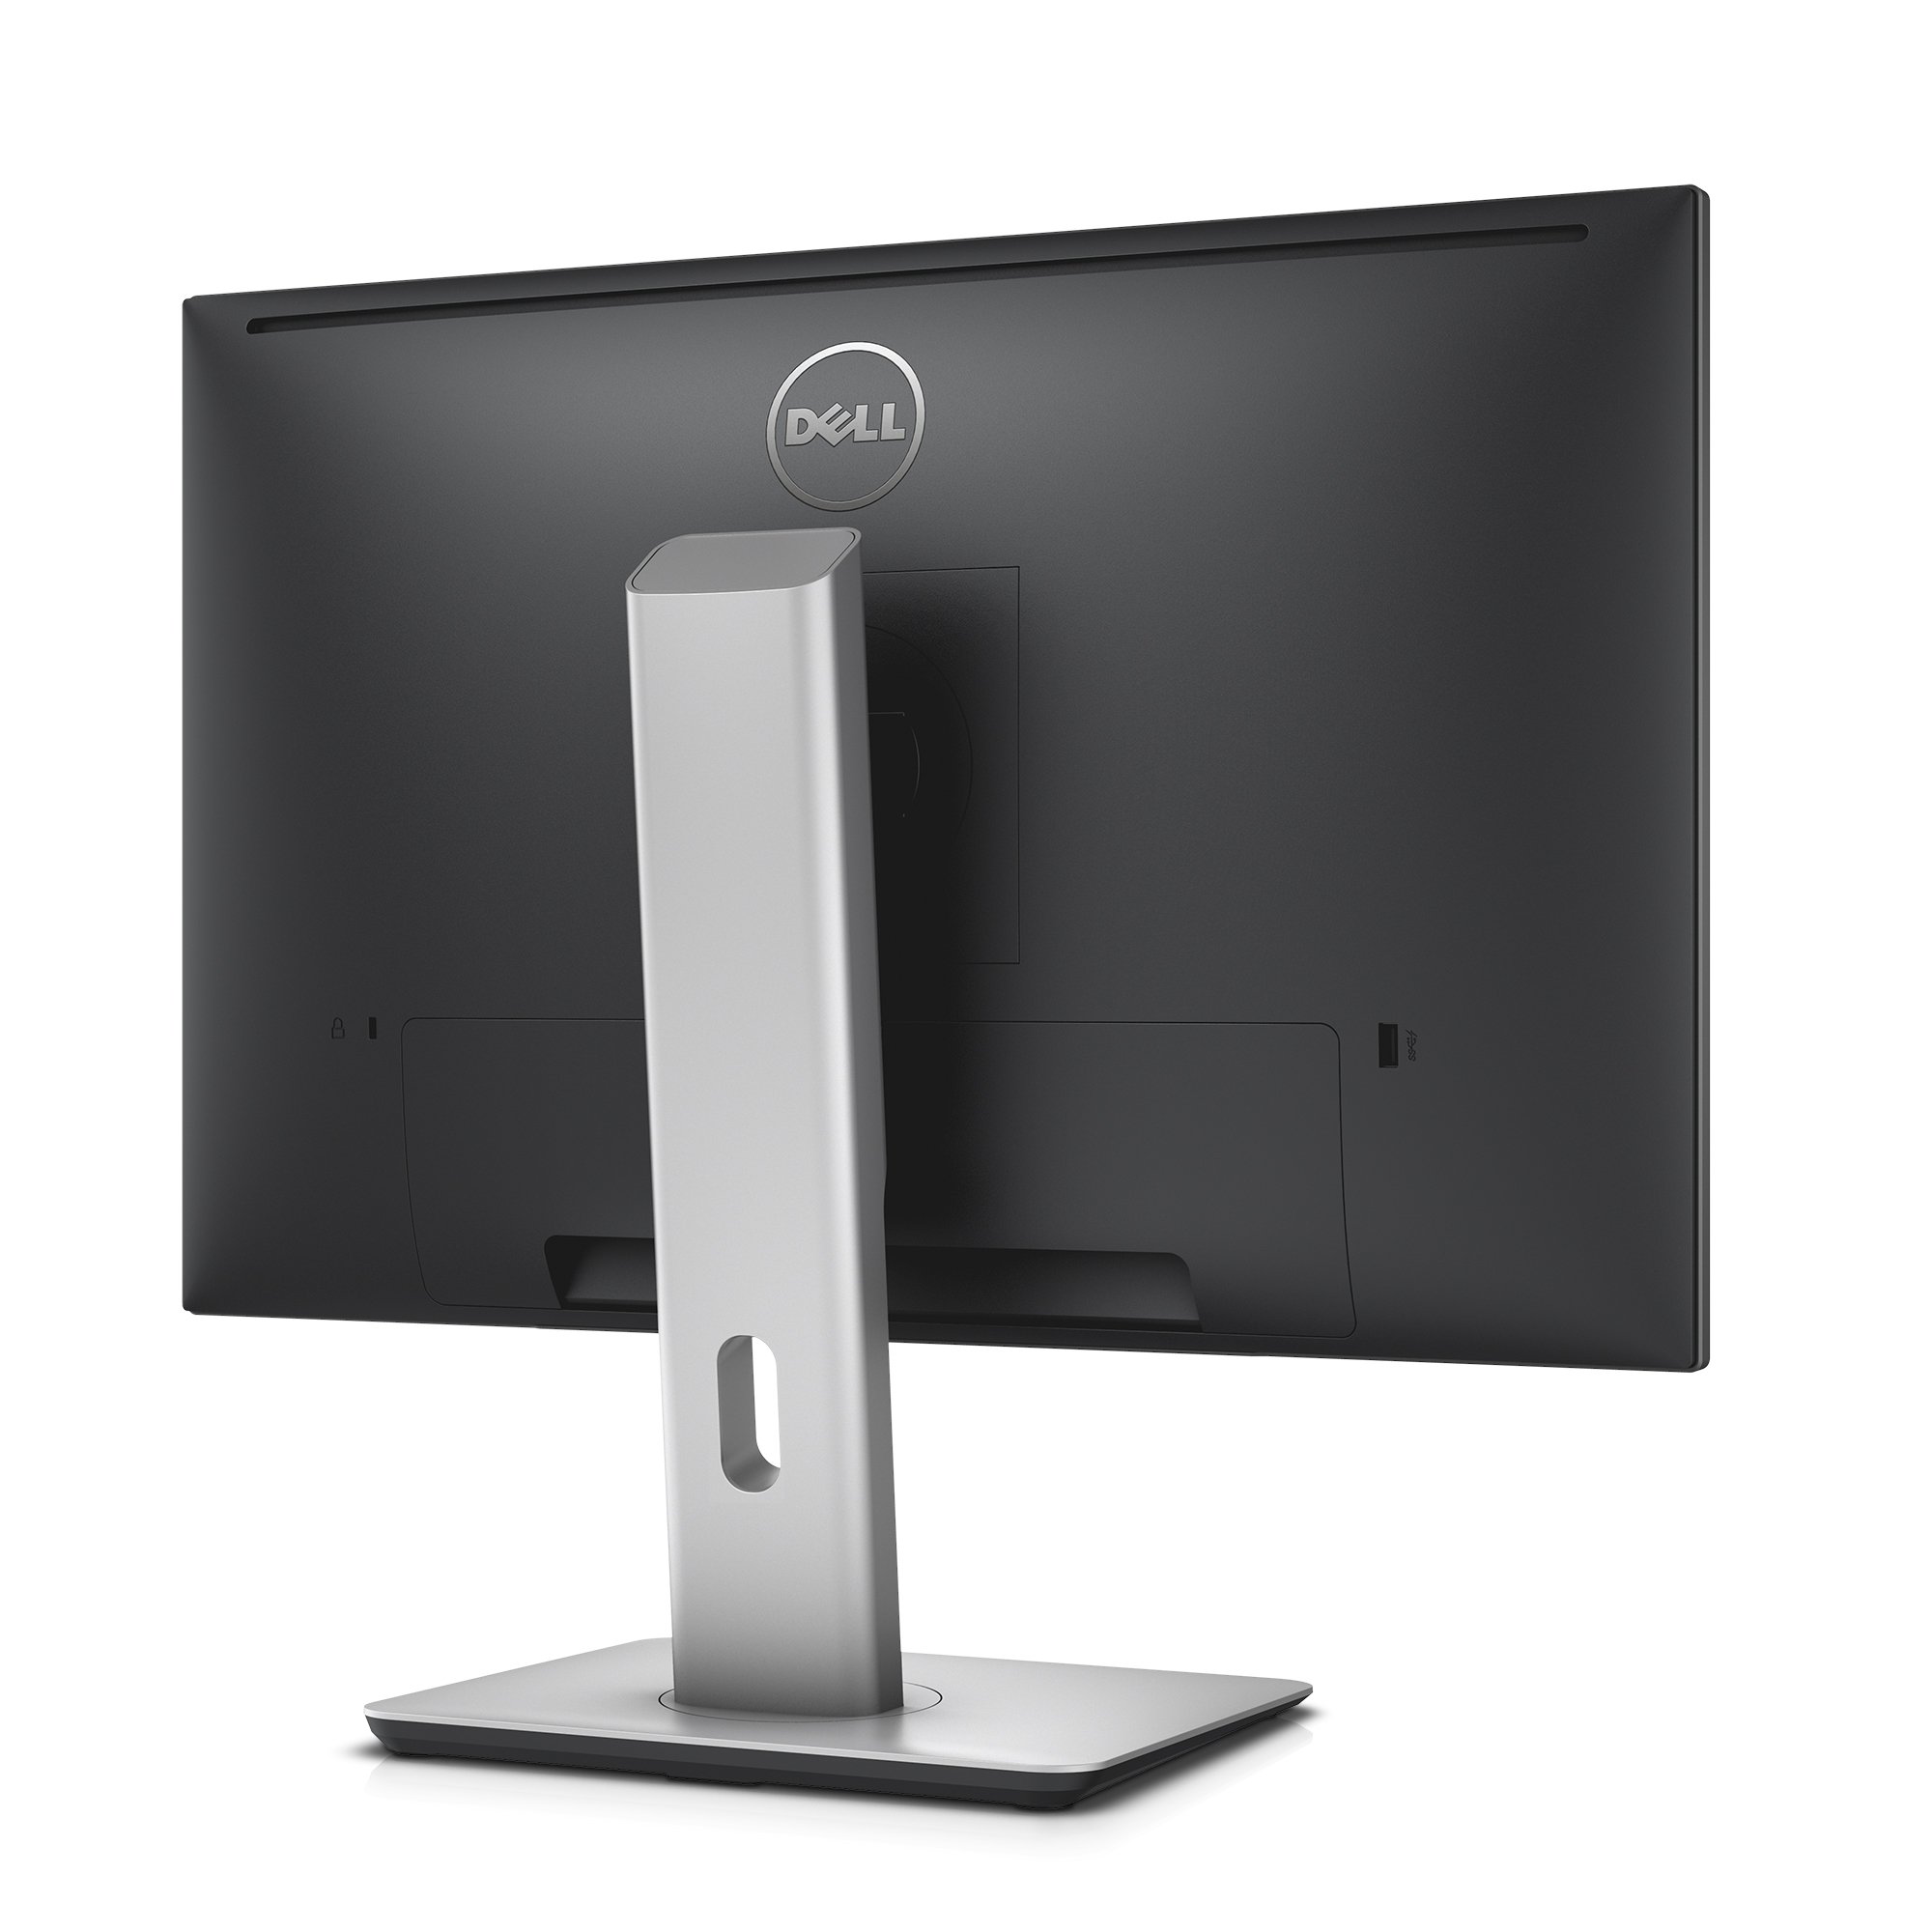 Dell Computer Ultrasharp U2415 24.0-Inch FHD 1080p Screen LED Monitor, Black